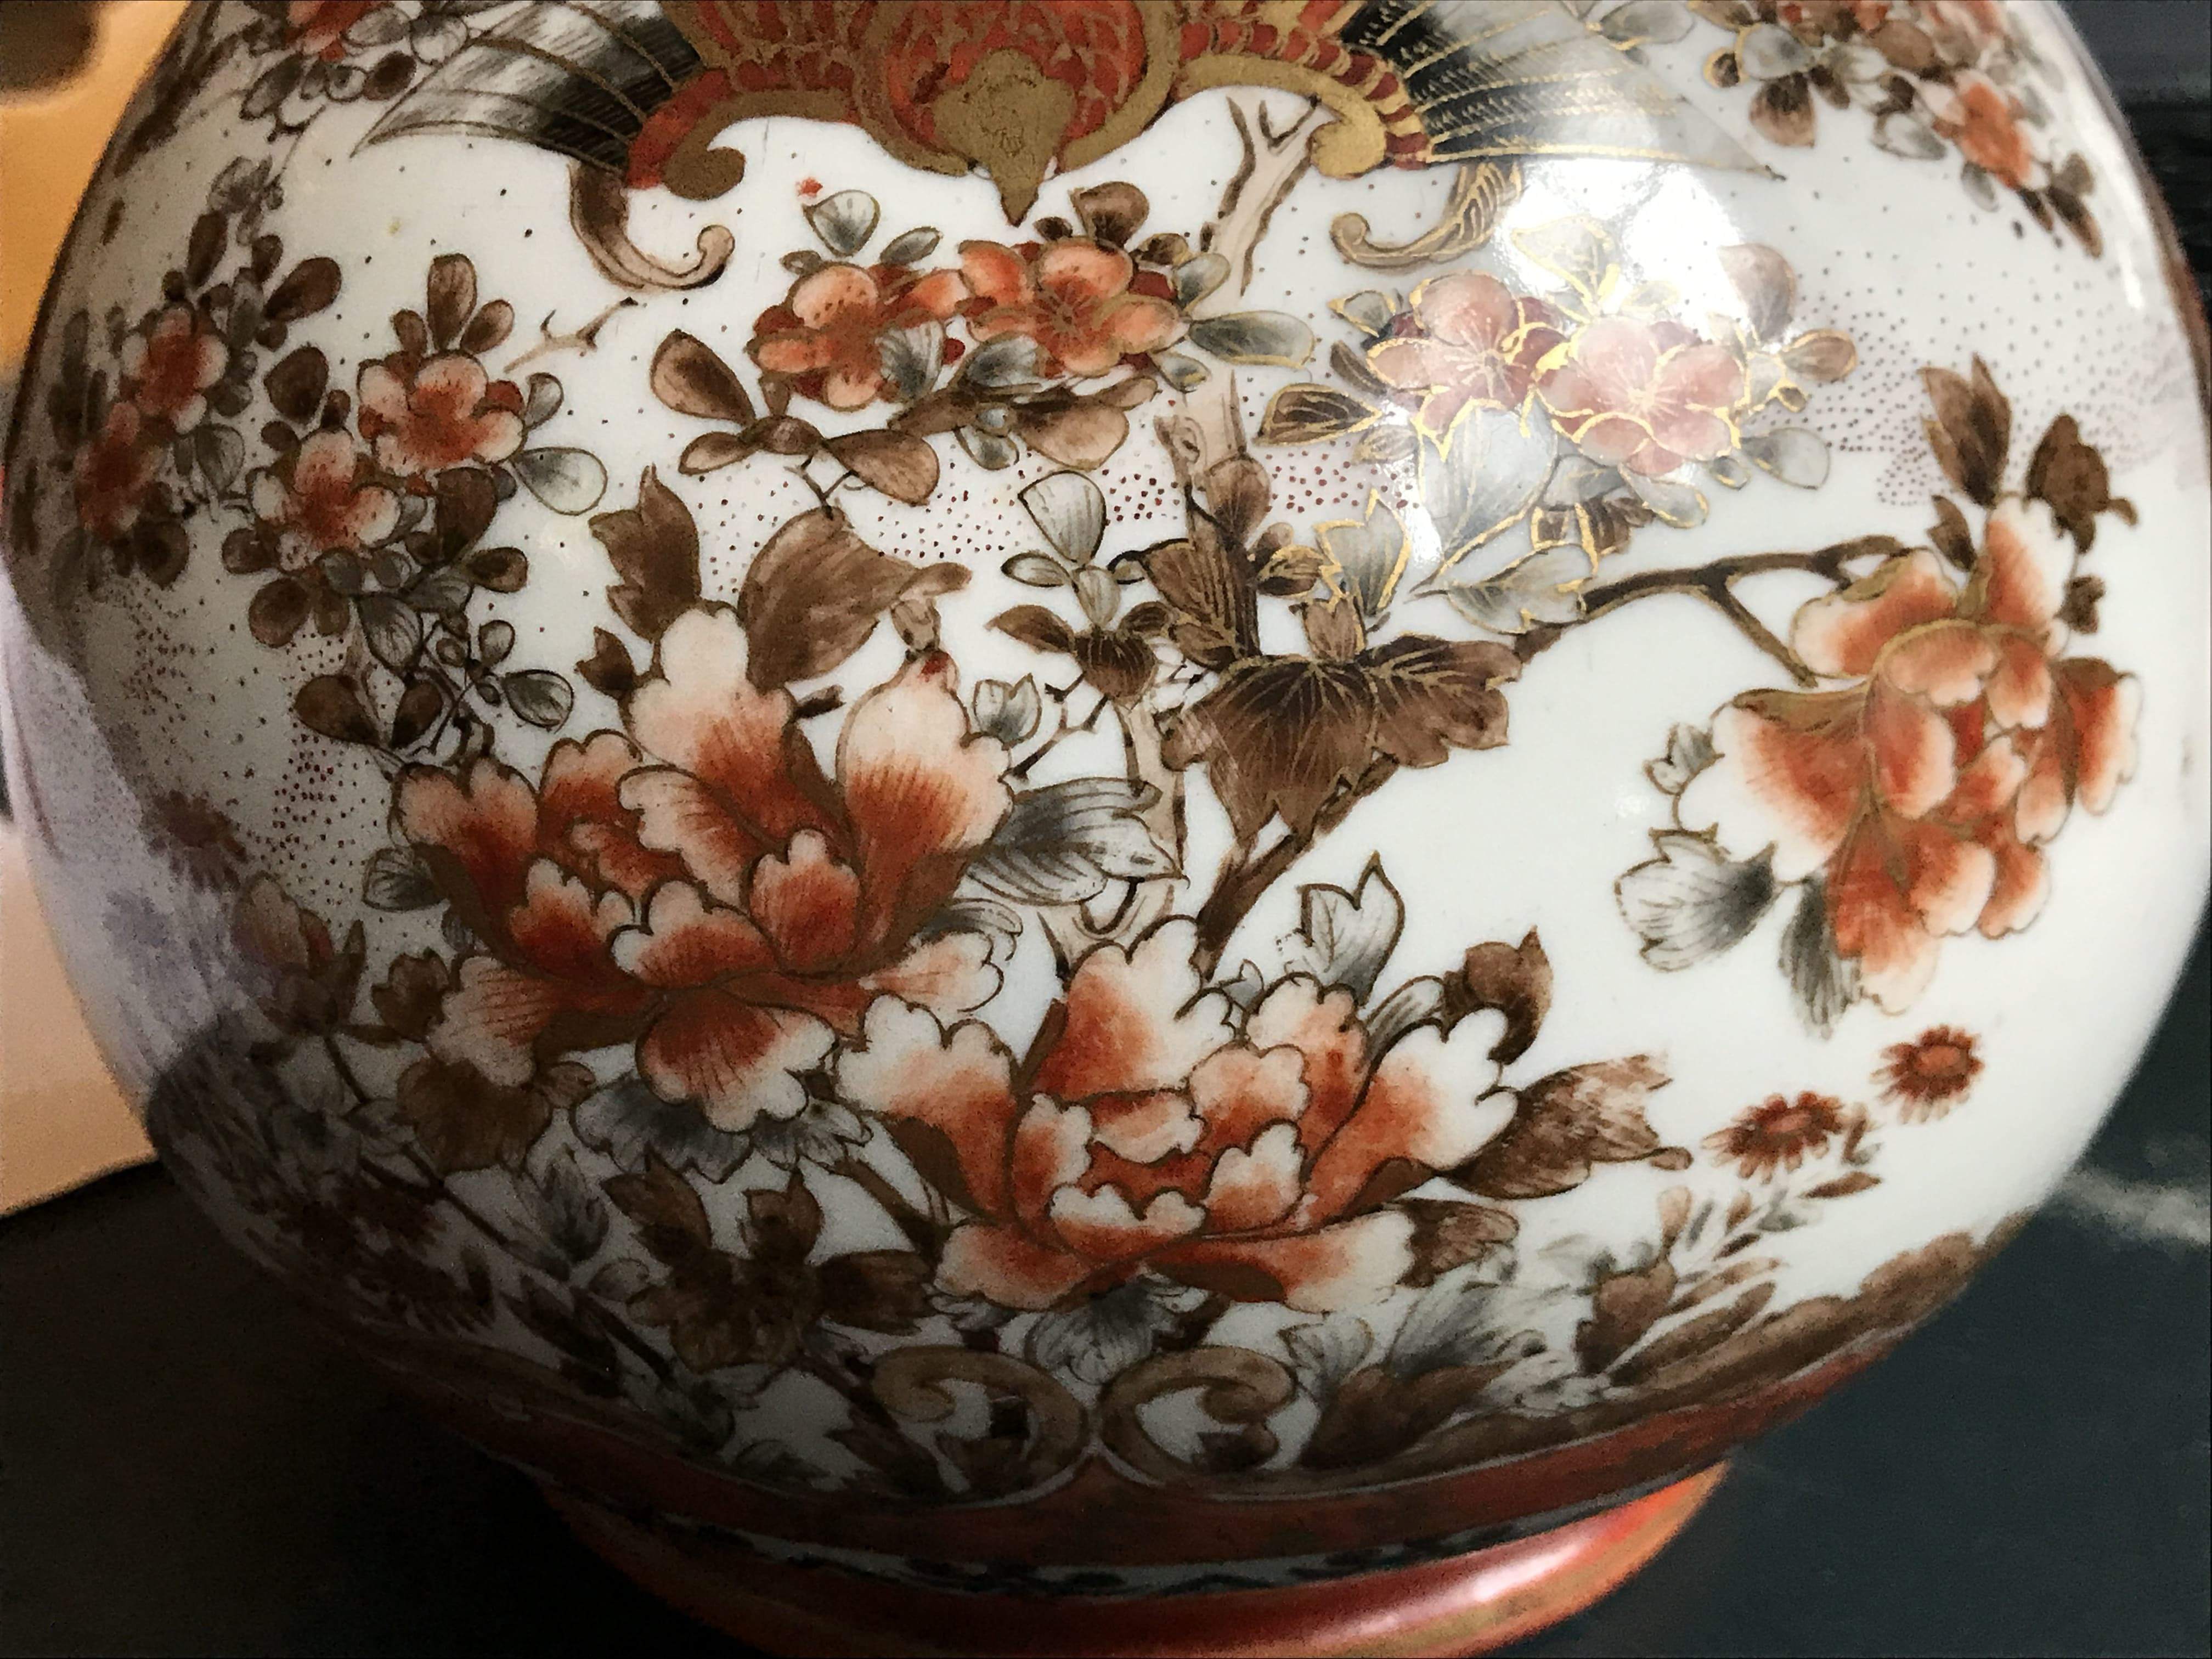 A pair of Japanese Kutani vases, late Meiji period, 1868-1912